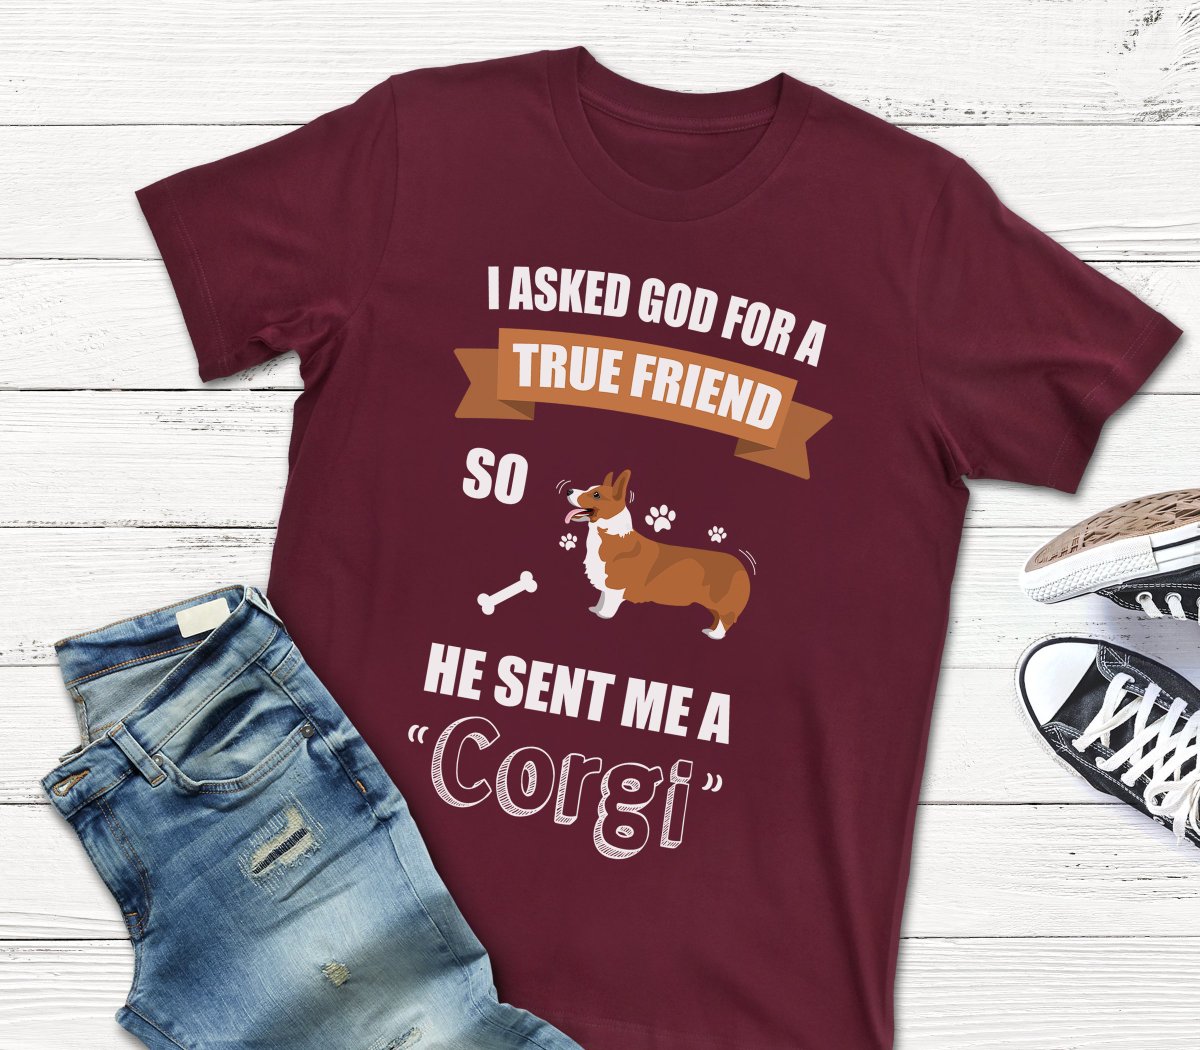 Corgi T-Shirt for Men & Women, Corgi Lovers T Shirt, Mom and Dad Corgi Gift, Corgi Apparel Clothing Gifts, Corgi Lover Tee Shirts etsy.me/2LWy8Nd #corgit-shirt #corgishirt #corgitee #corgiteeshirt #corgitshirt #corgit-shirts #corgishirts #corgitees #corgitshirt